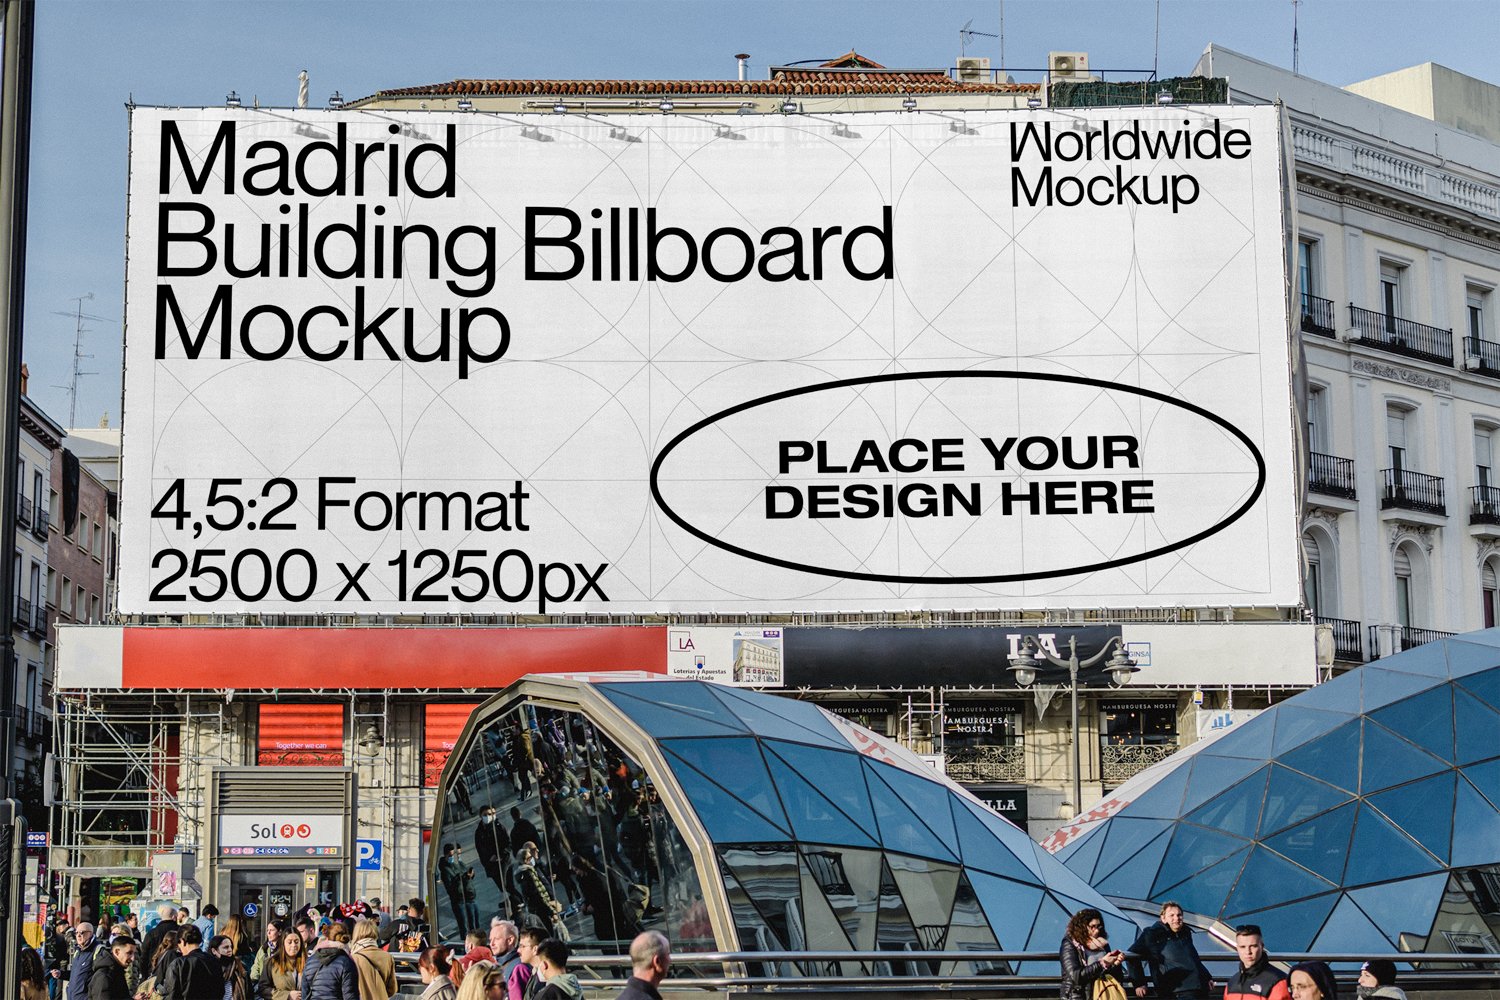 Madrid Urban Billboard Mockup cover image.